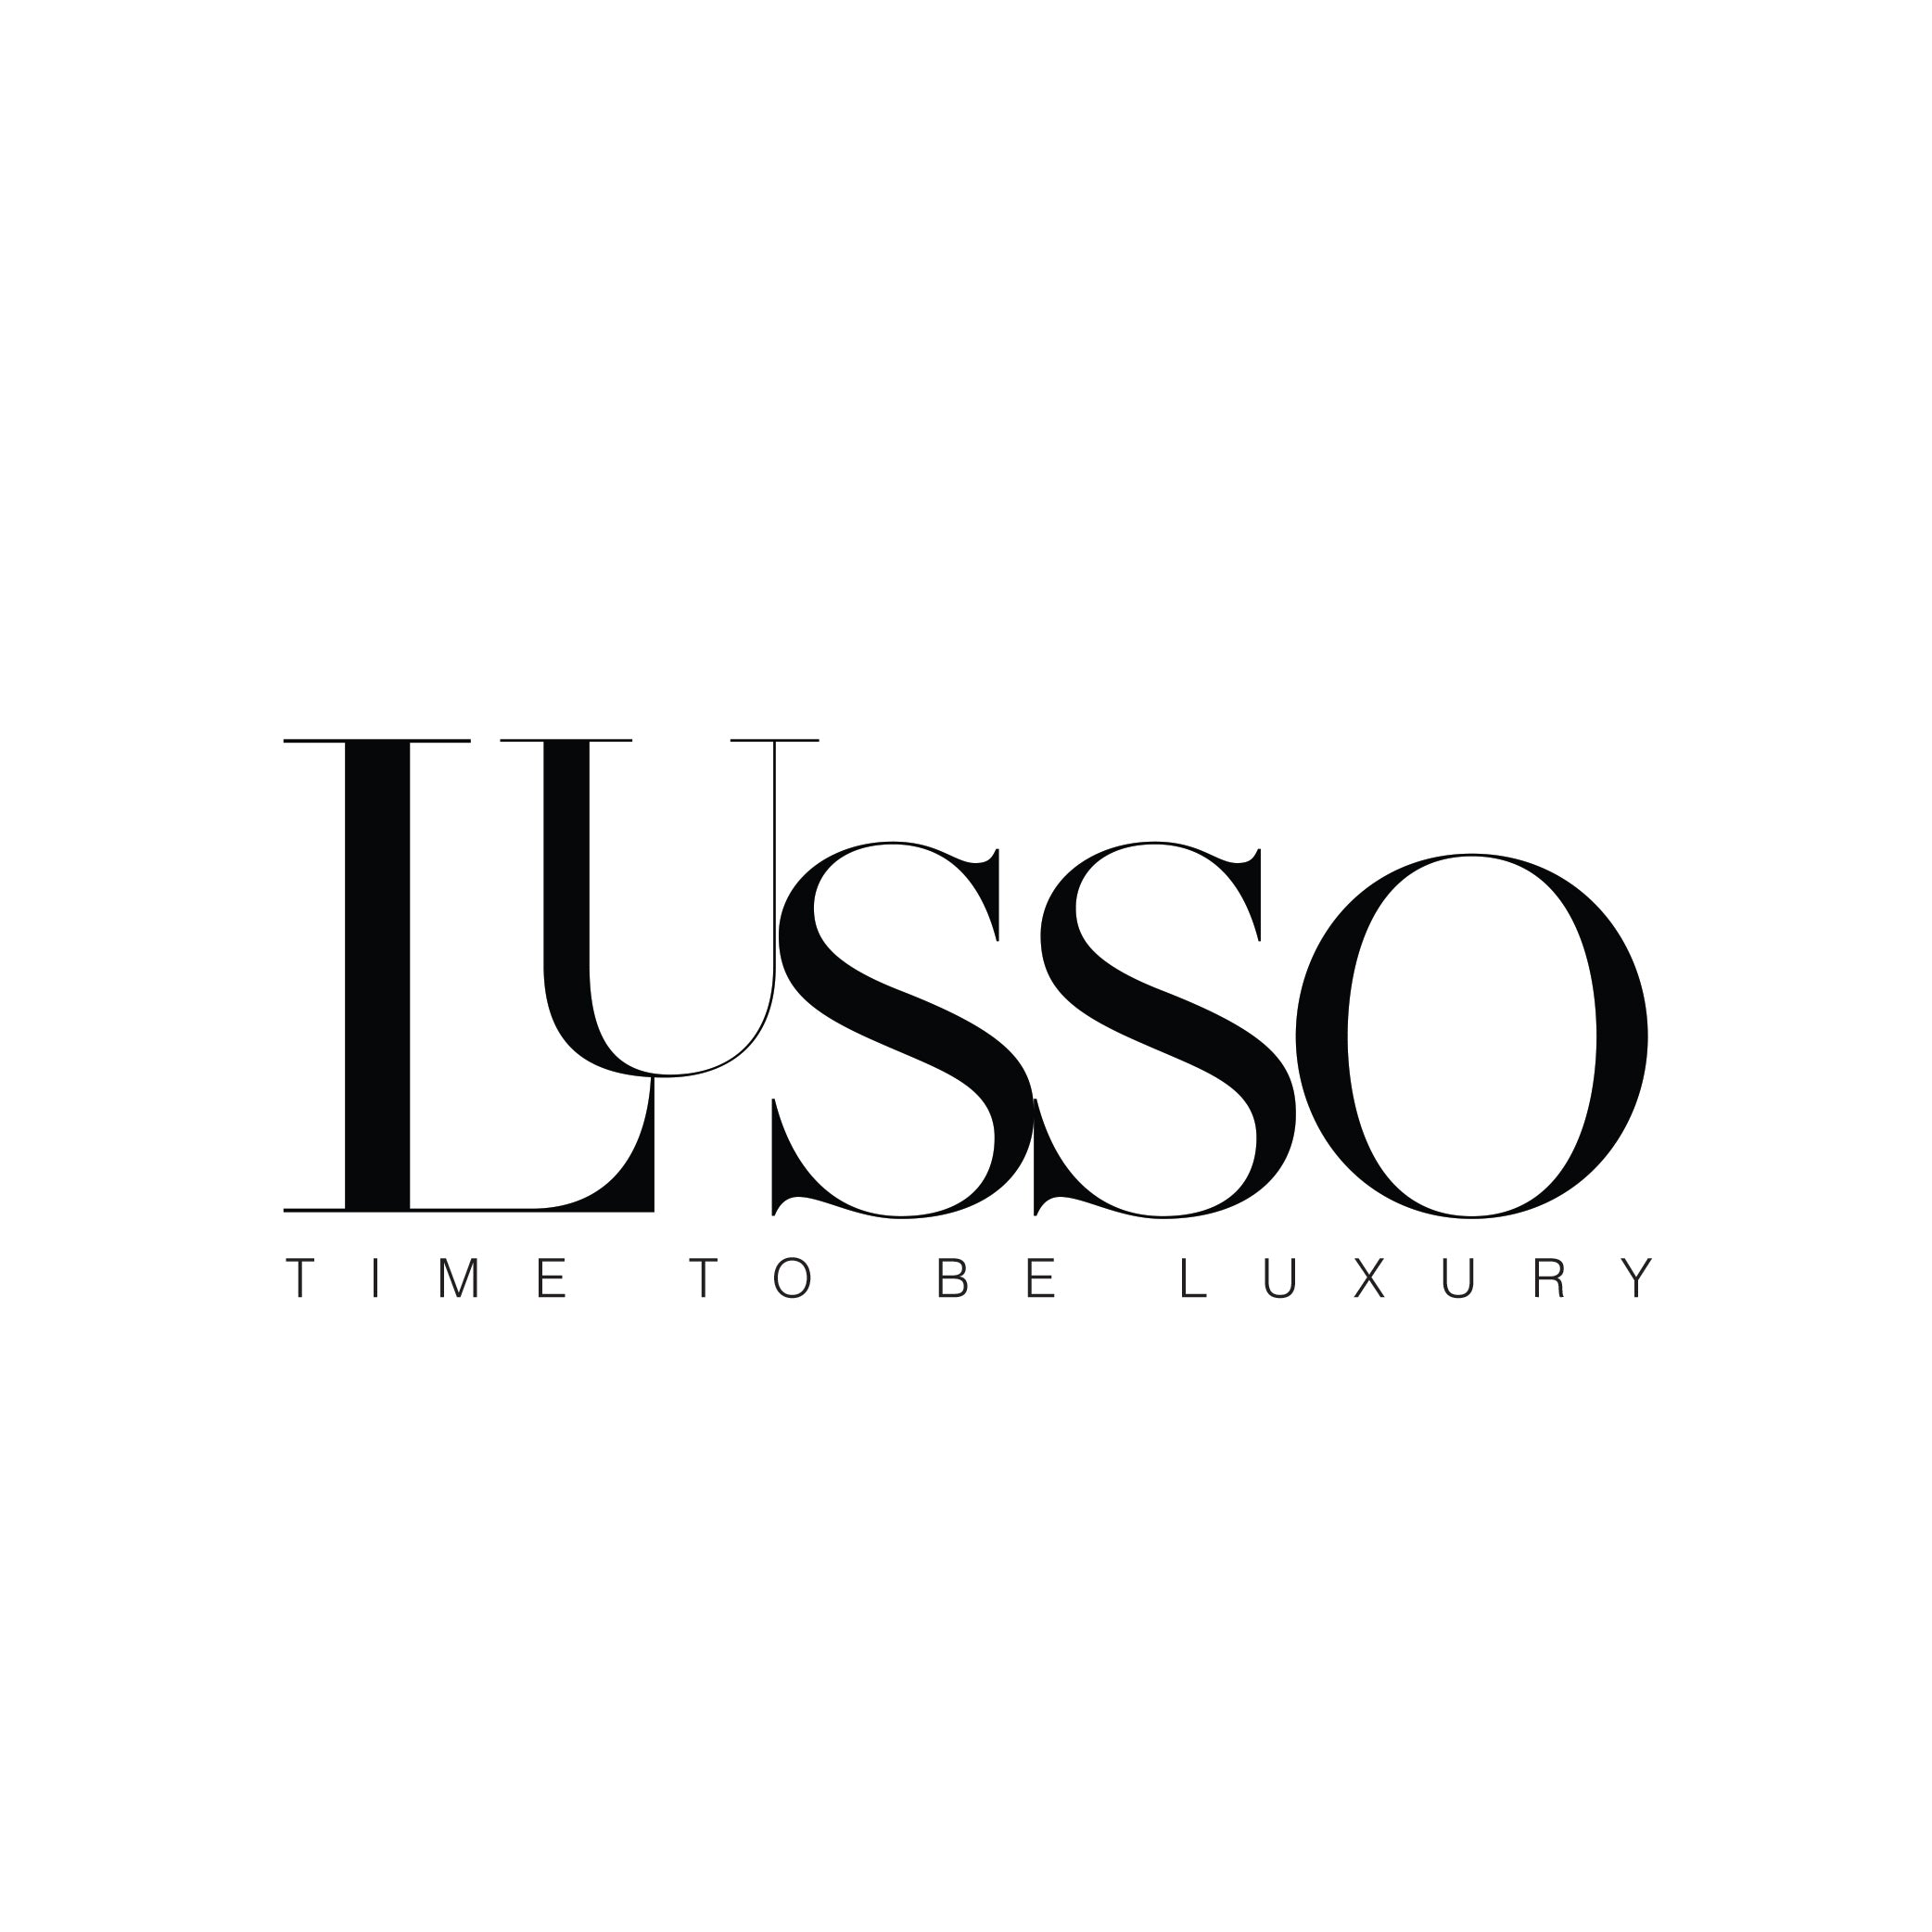 LussoCA Women's Clothing & Smart Casual Wardrobe | Order Now